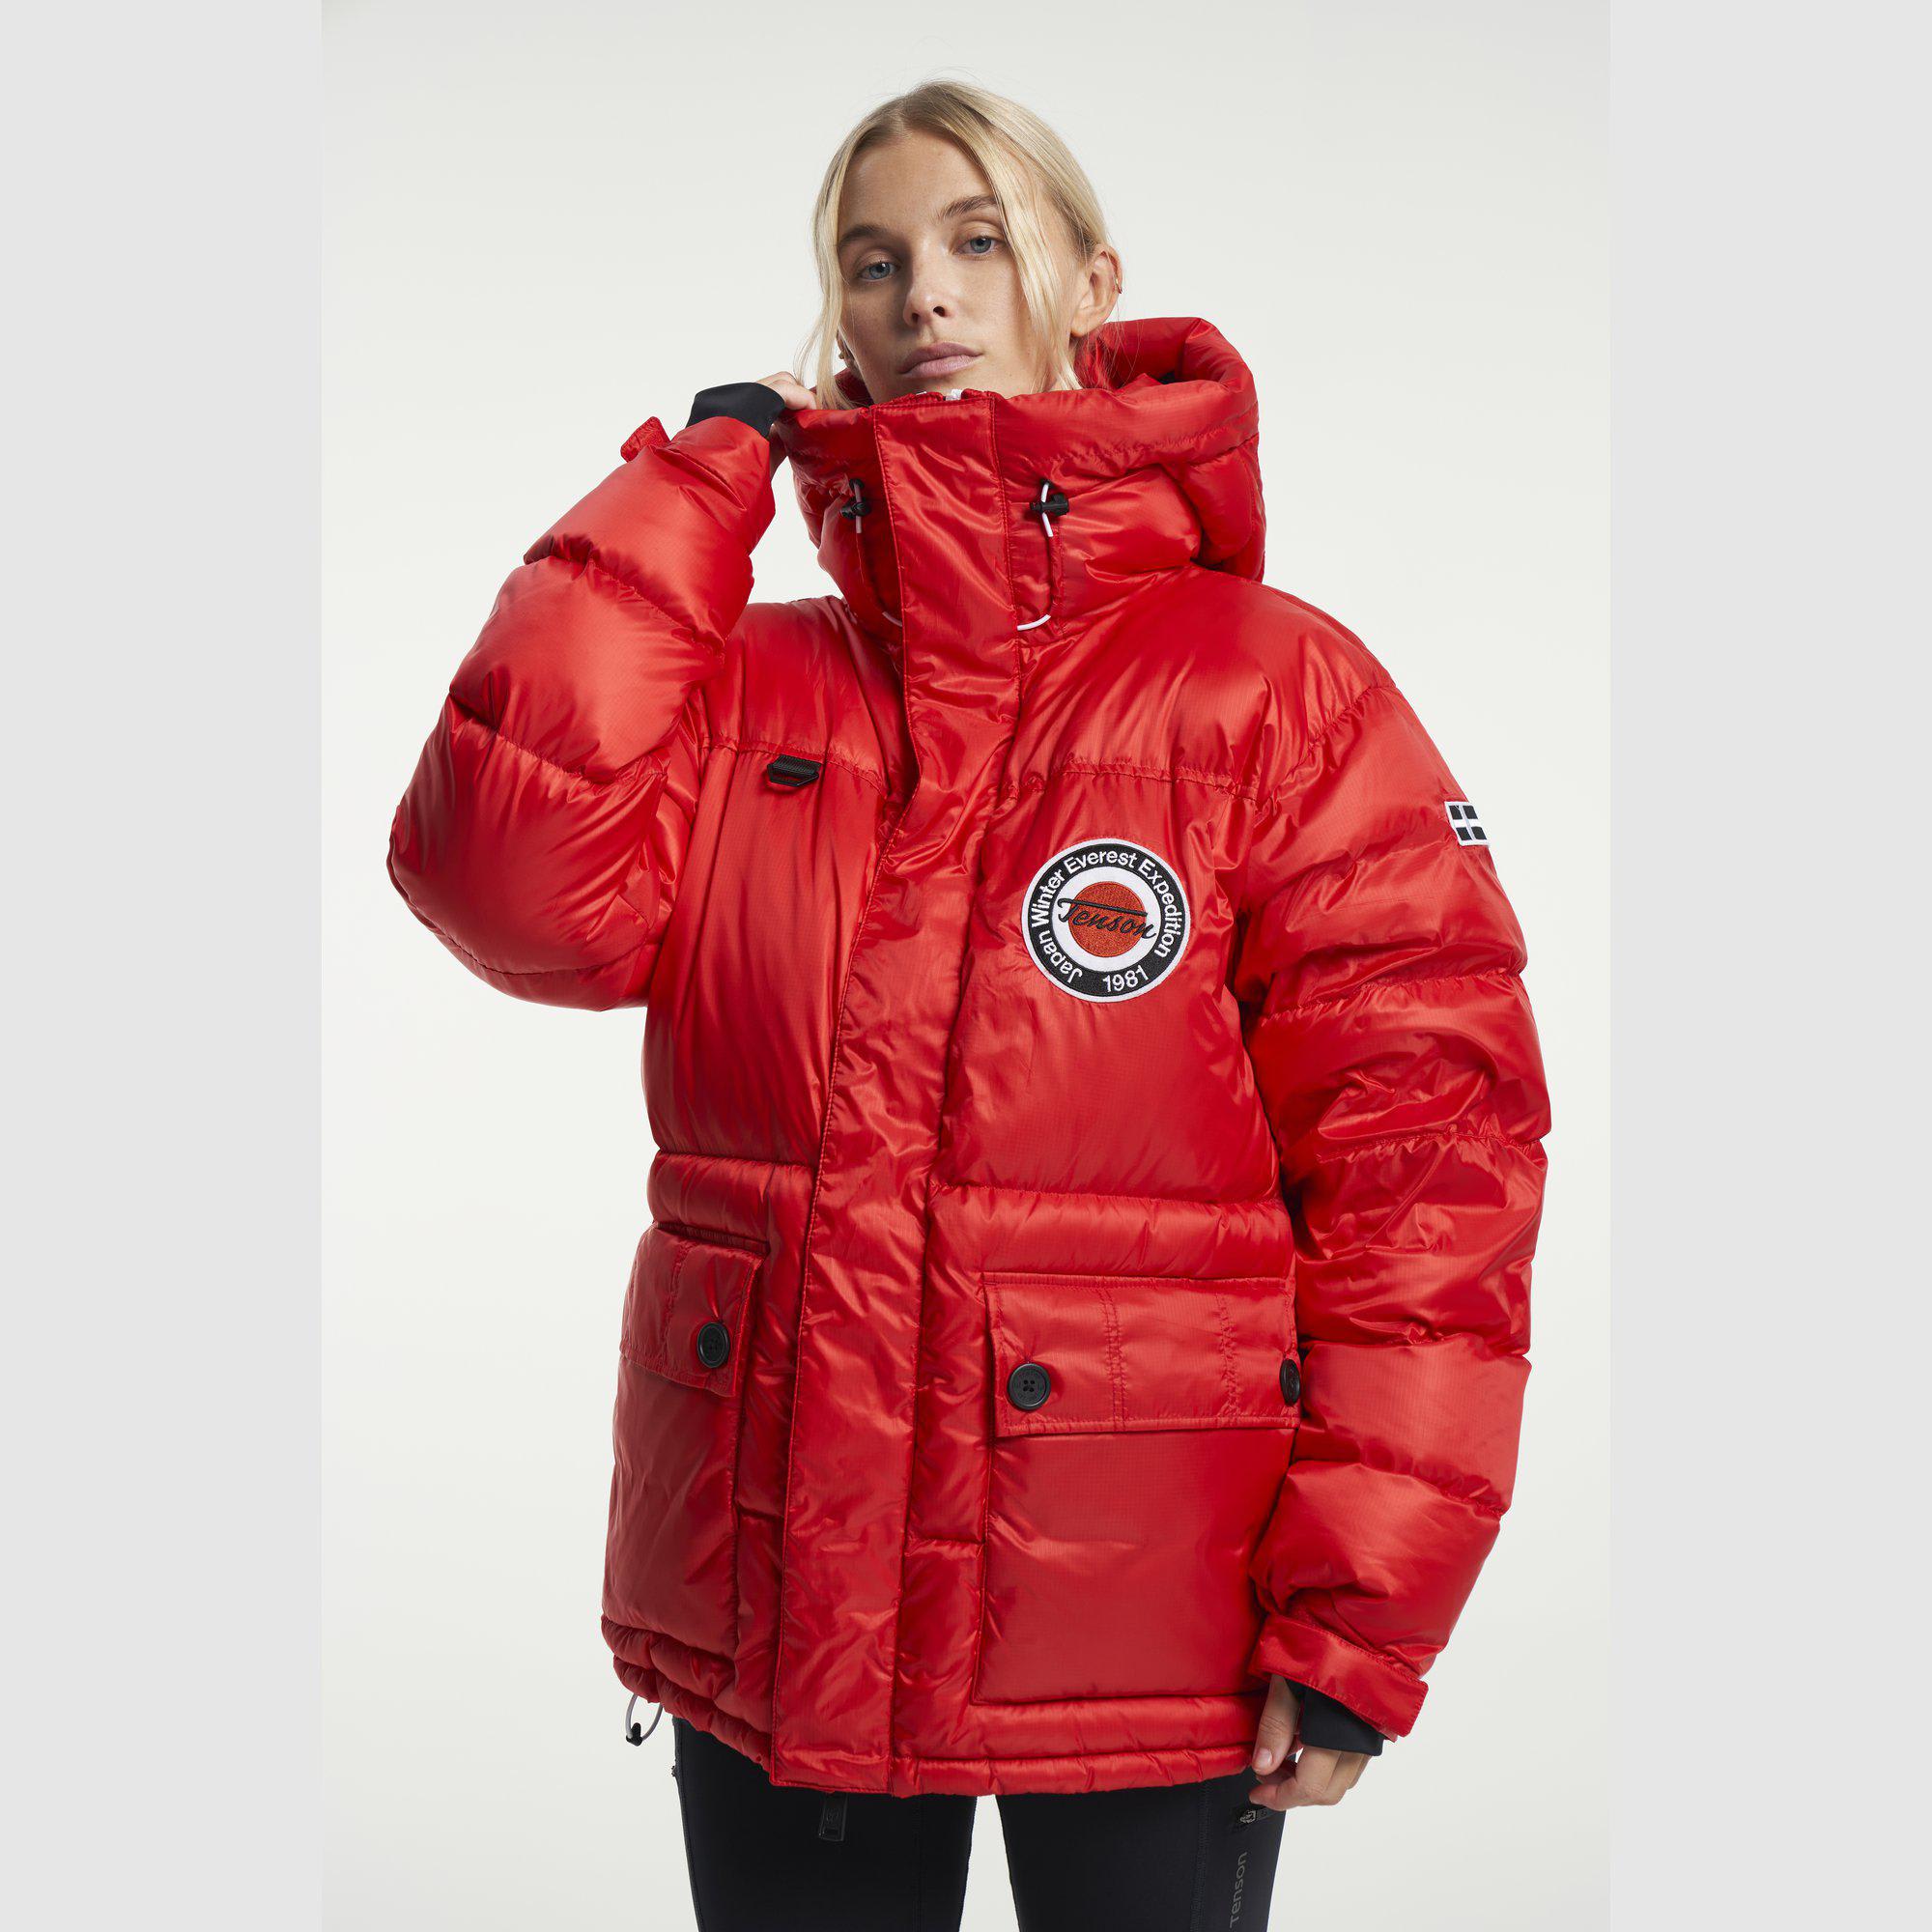 Naomi Expedition Jacket